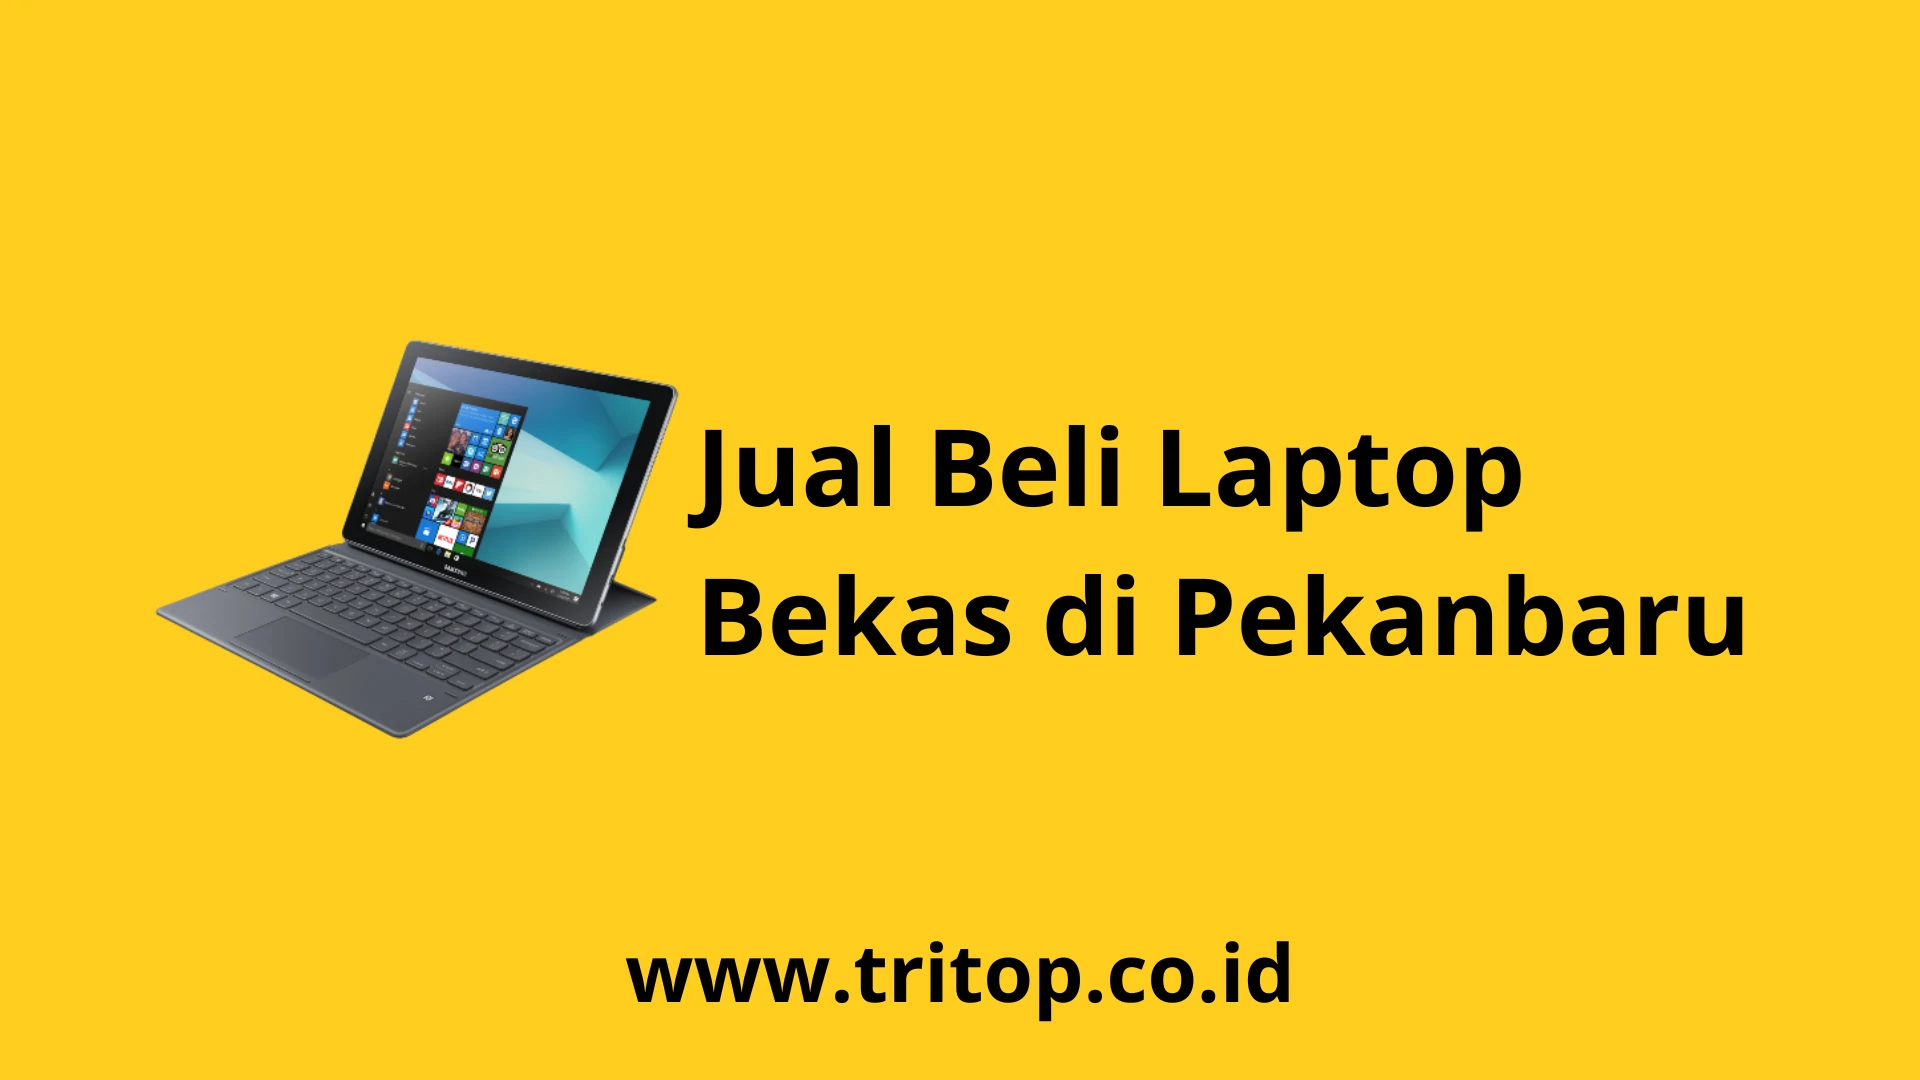 Jual Beli Laptop Bekas Pekanbaru Tritop.co.id